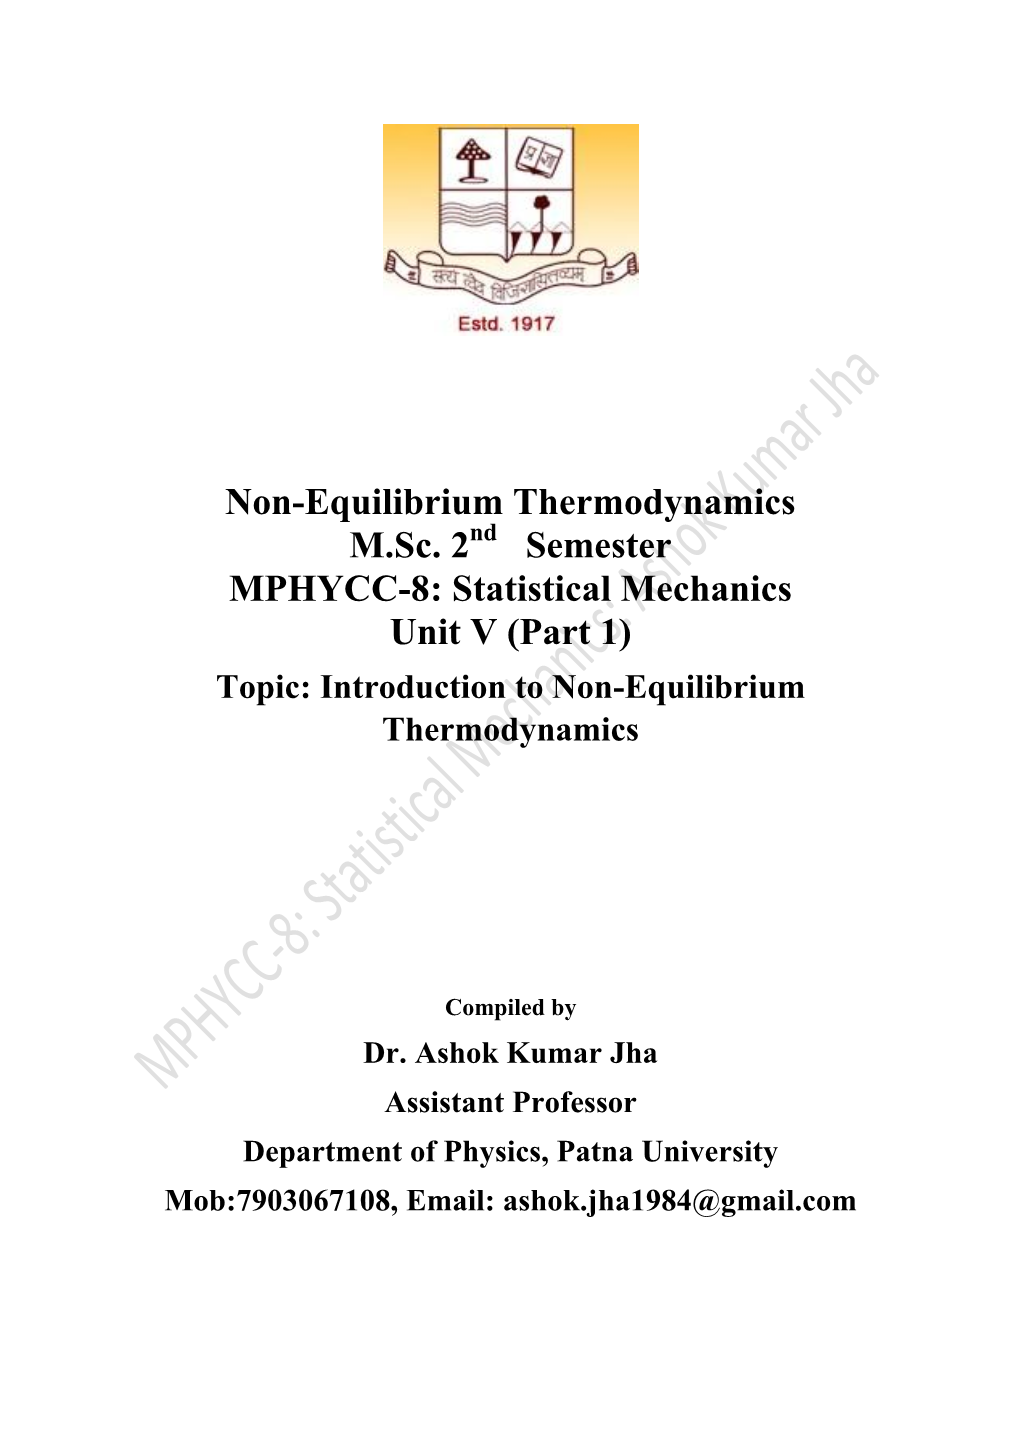 Non-Equilibrium Thermodynamics M.Sc. 2Nd Semester MPHYCC-8: Statistical Mechanics Unit V (Part 1) Topic: Introduction to Non-Equilibrium Thermodynamics